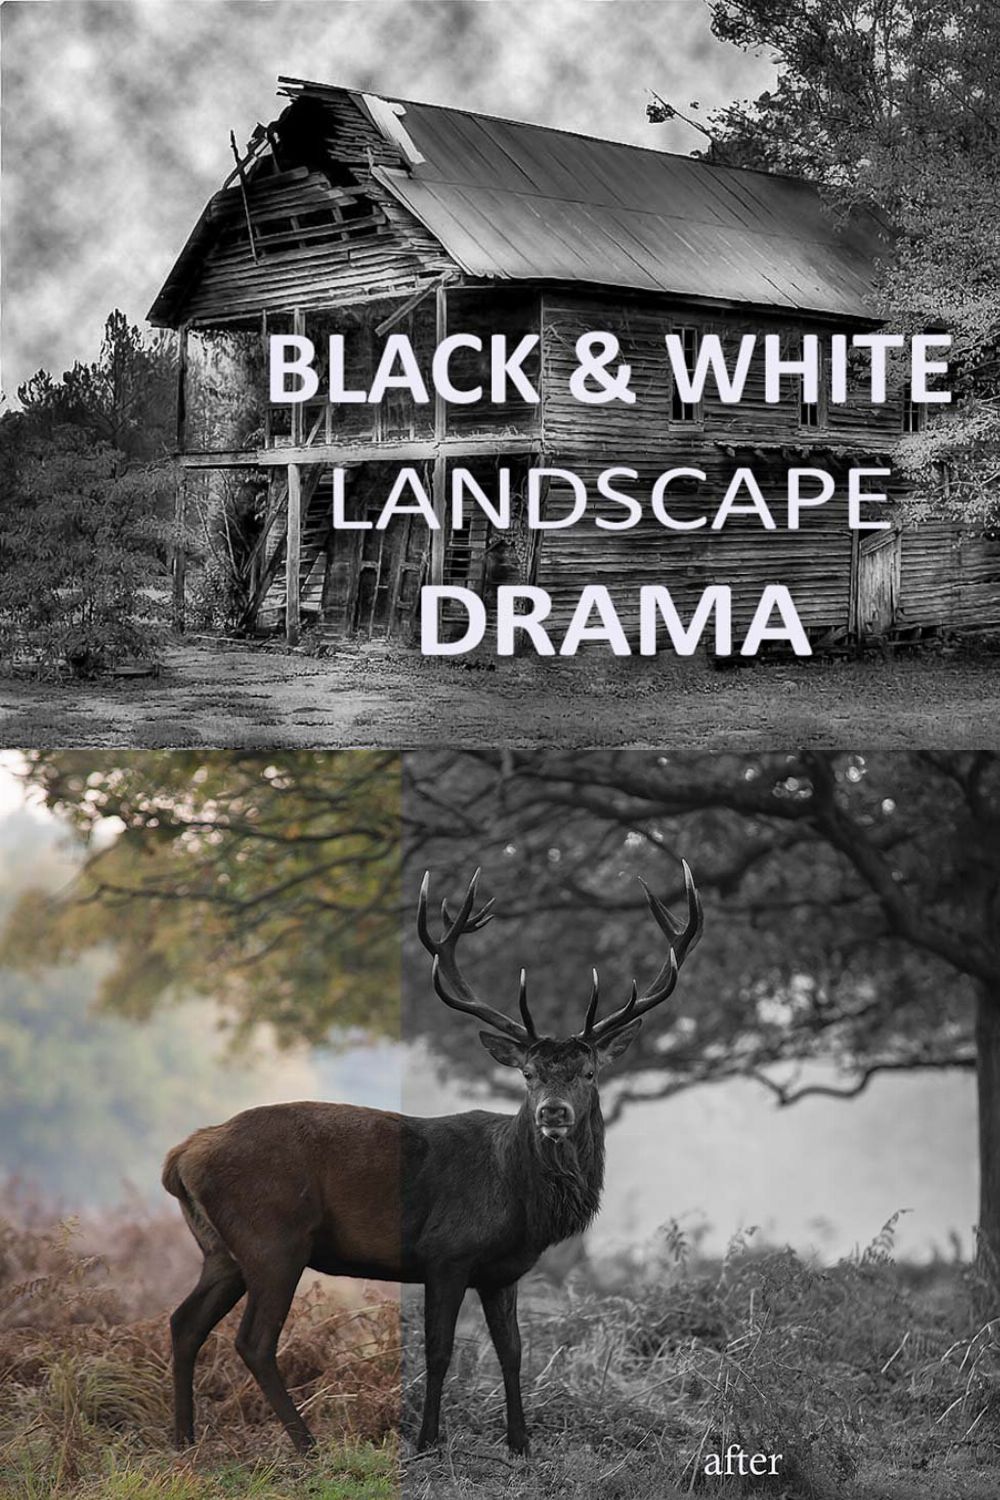 10 Black & White Landscape Drama pinterest preview image.